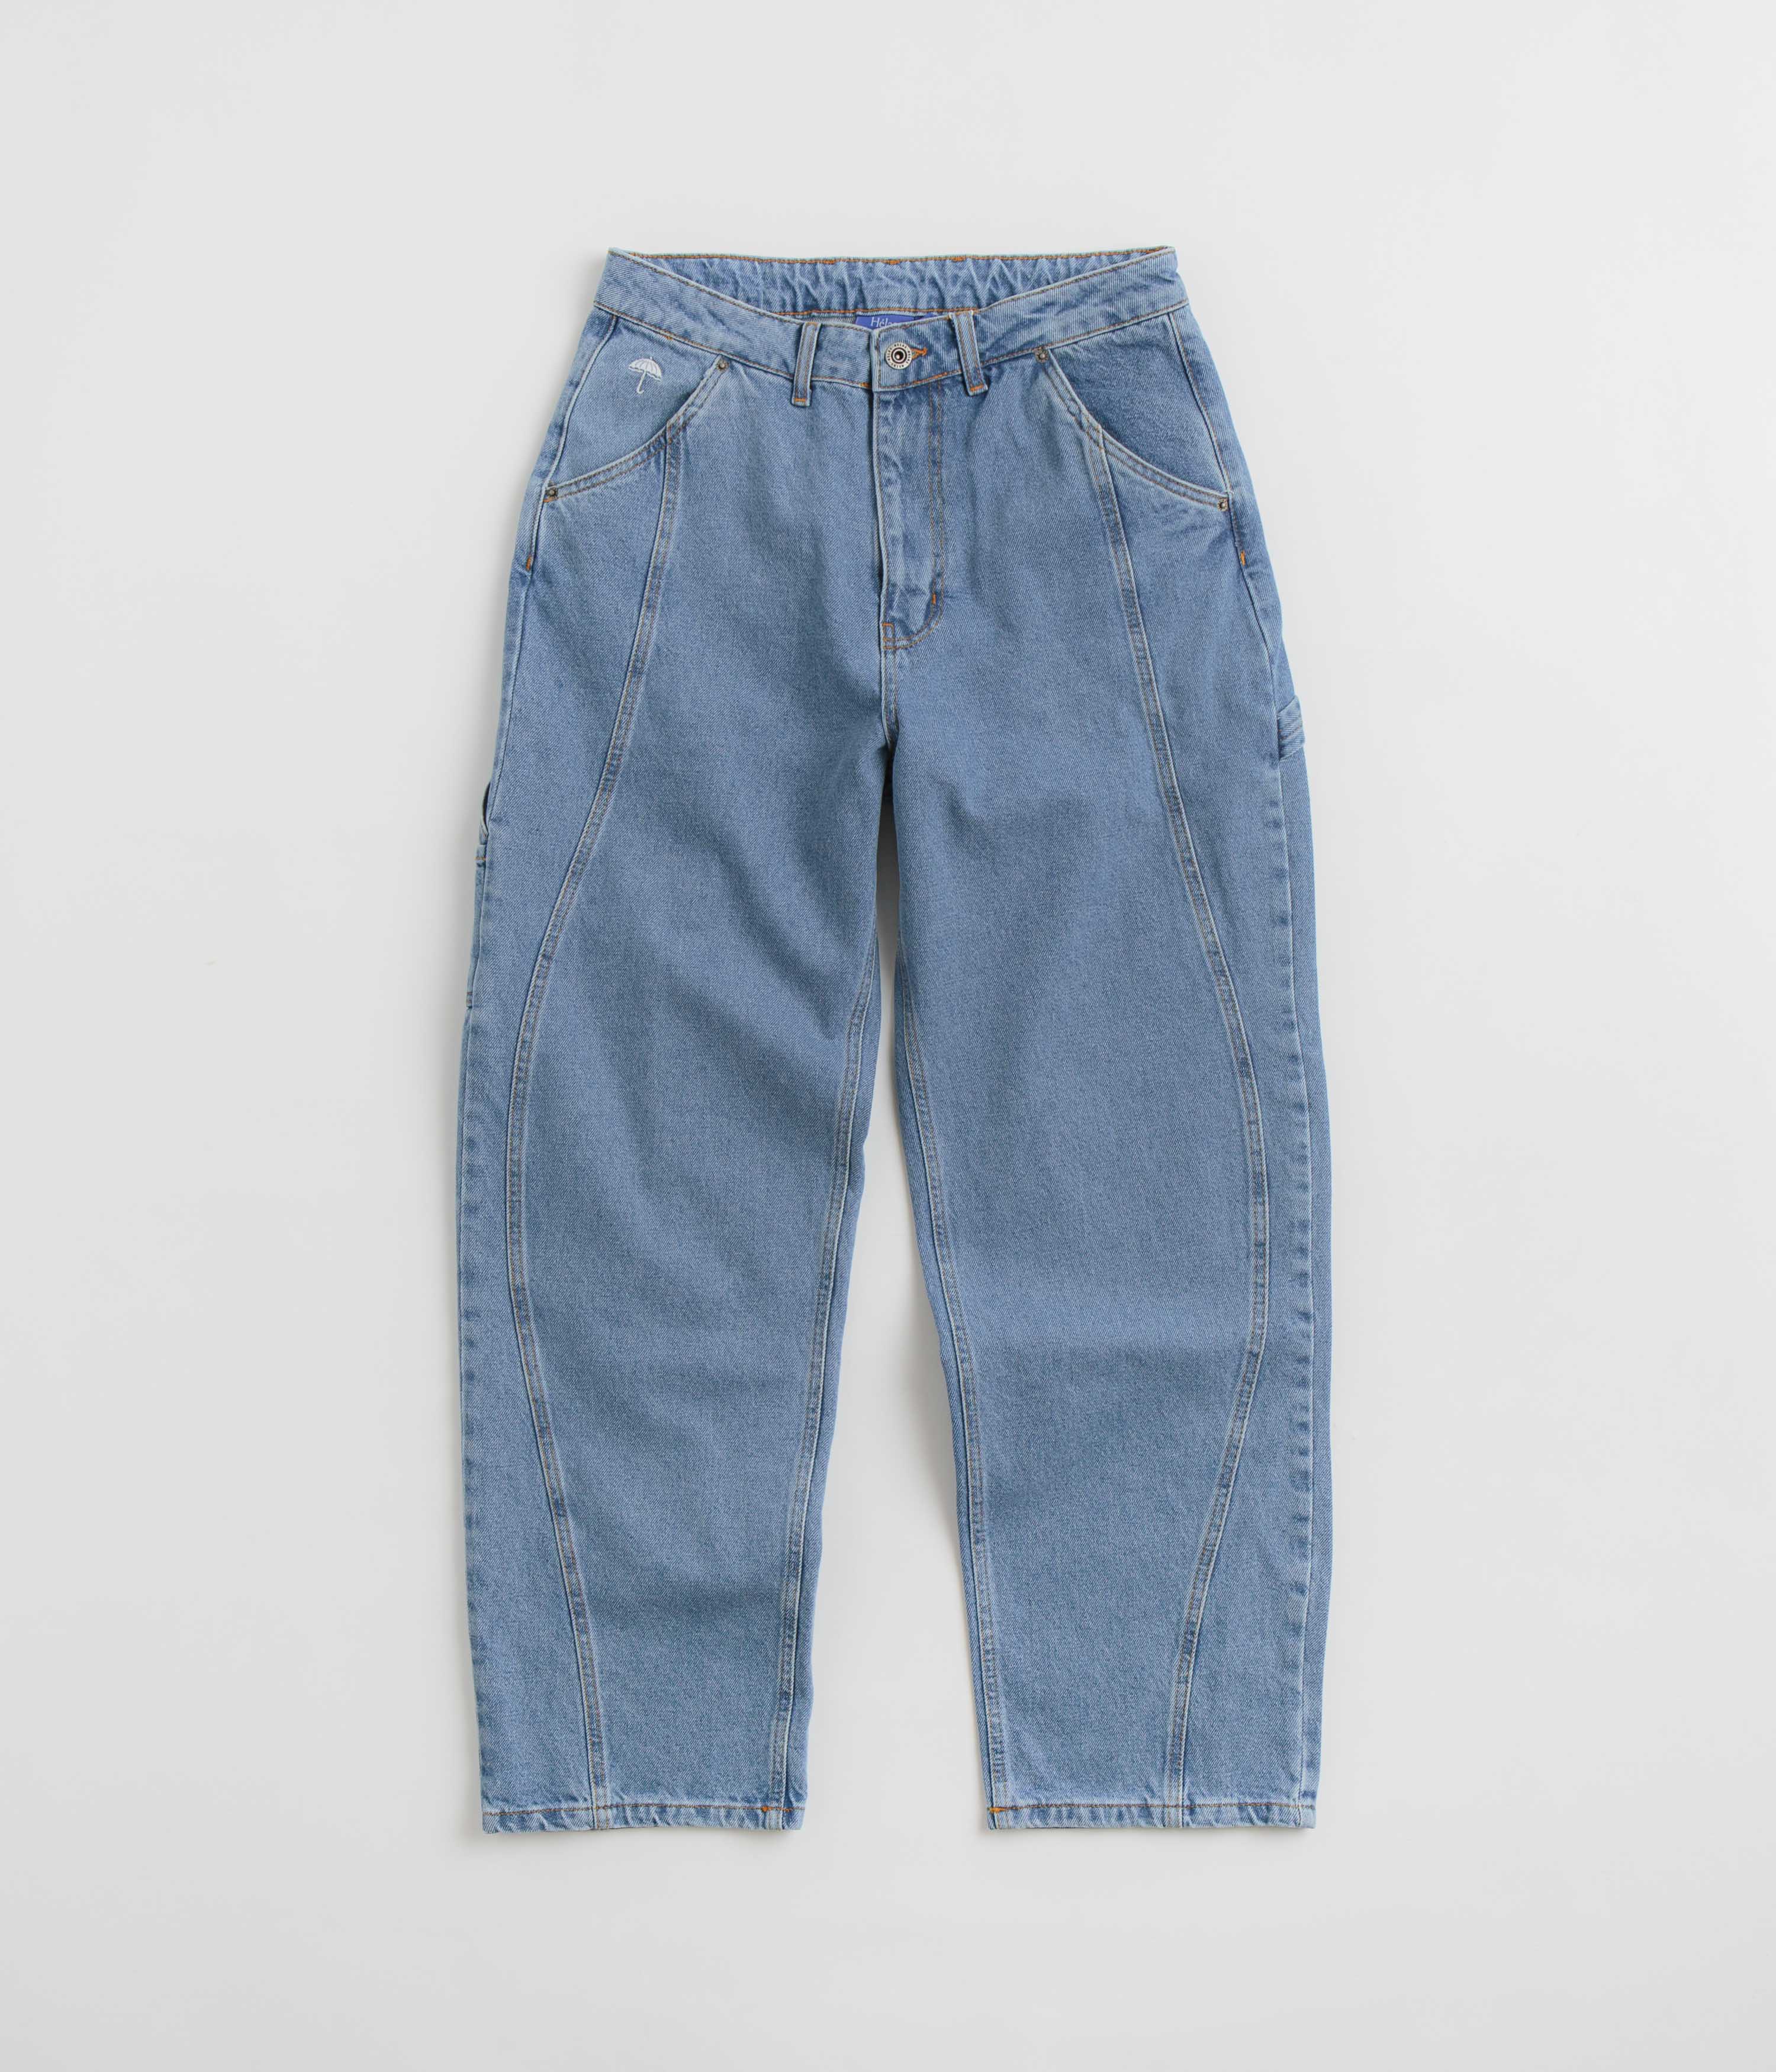 Polar x Iggy 93 Denim Jeans - Chains Washed Black | Flatspot